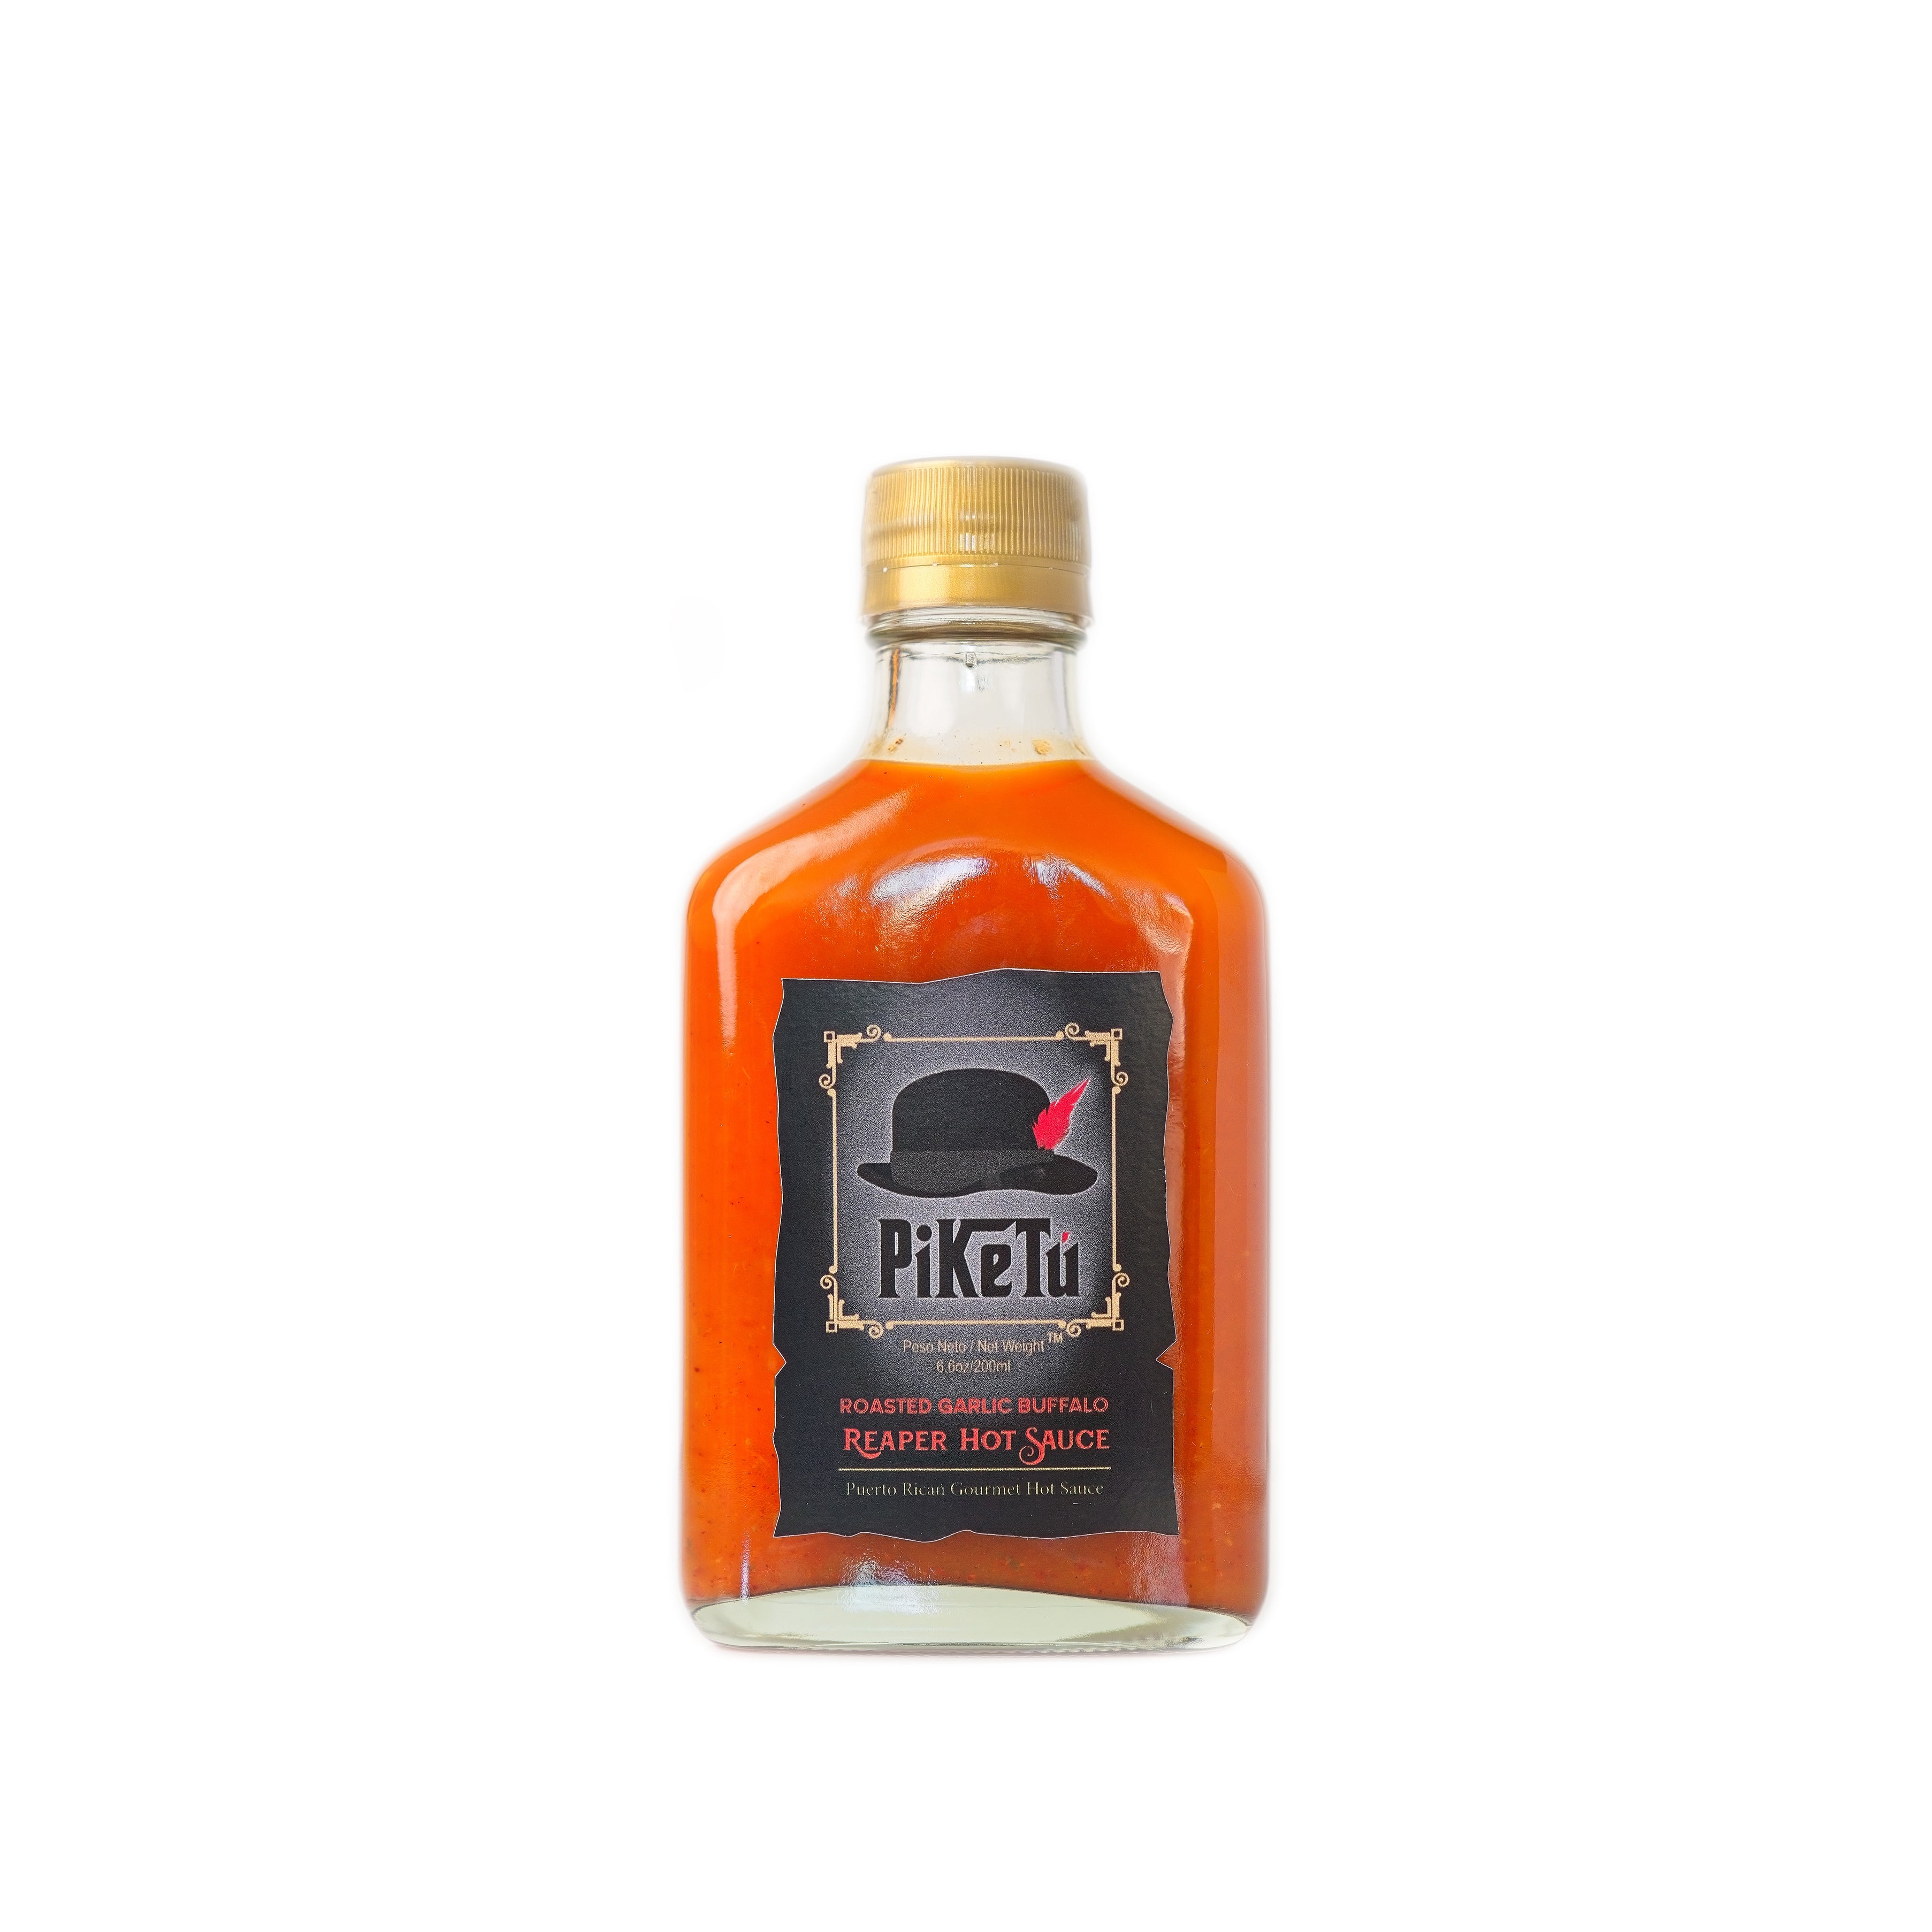 Roasted Garlic Buffalo Reaper Hot Sauce – 6.6oz Bottle